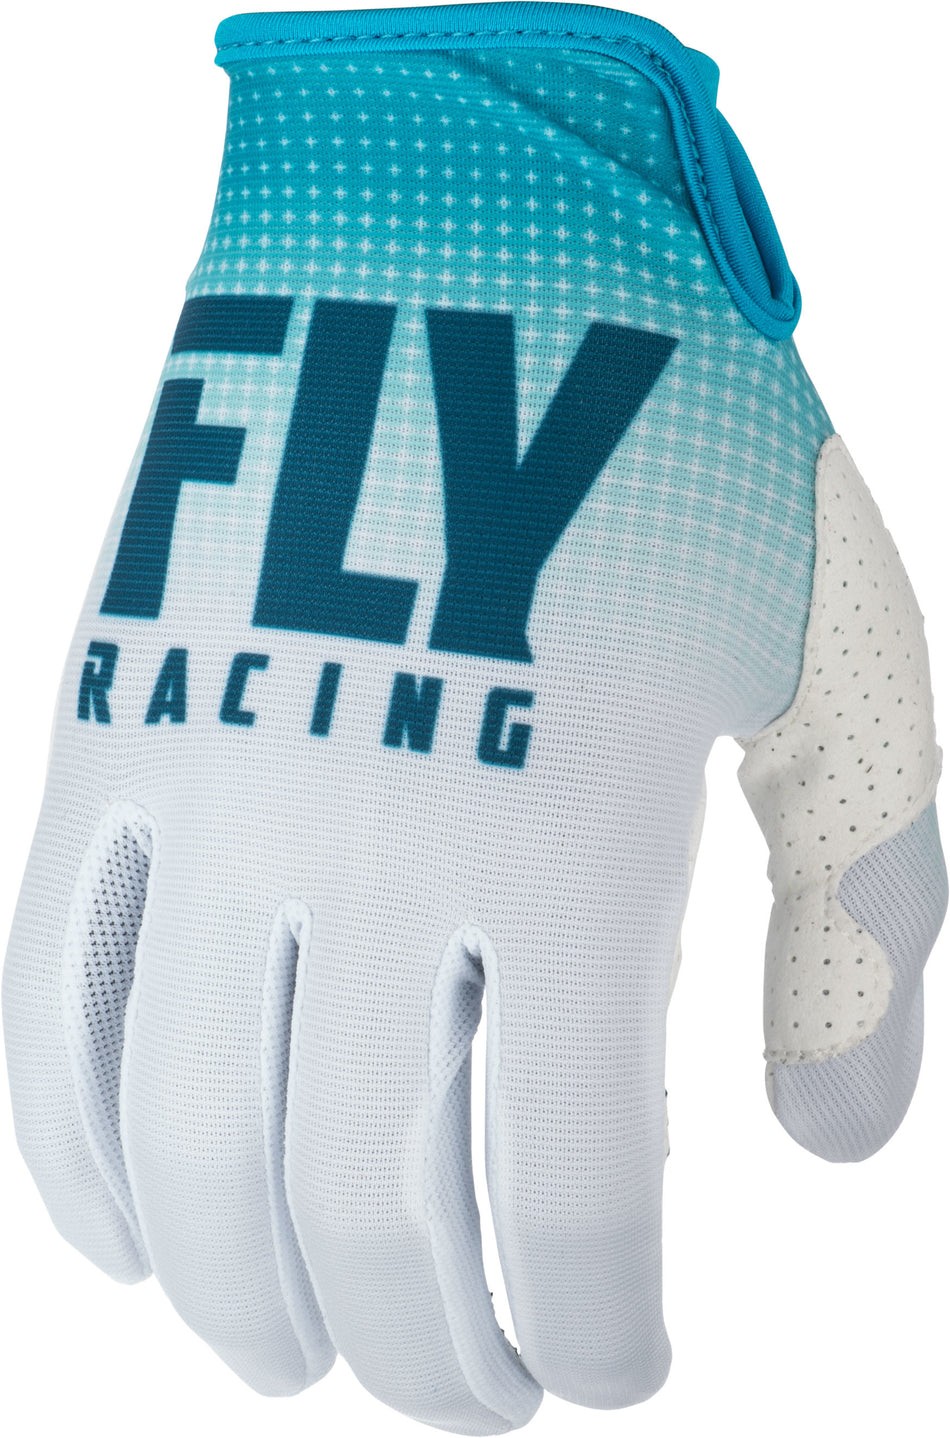 FLY RACING Lite Gloves Blue/White Sz 08 372-01108